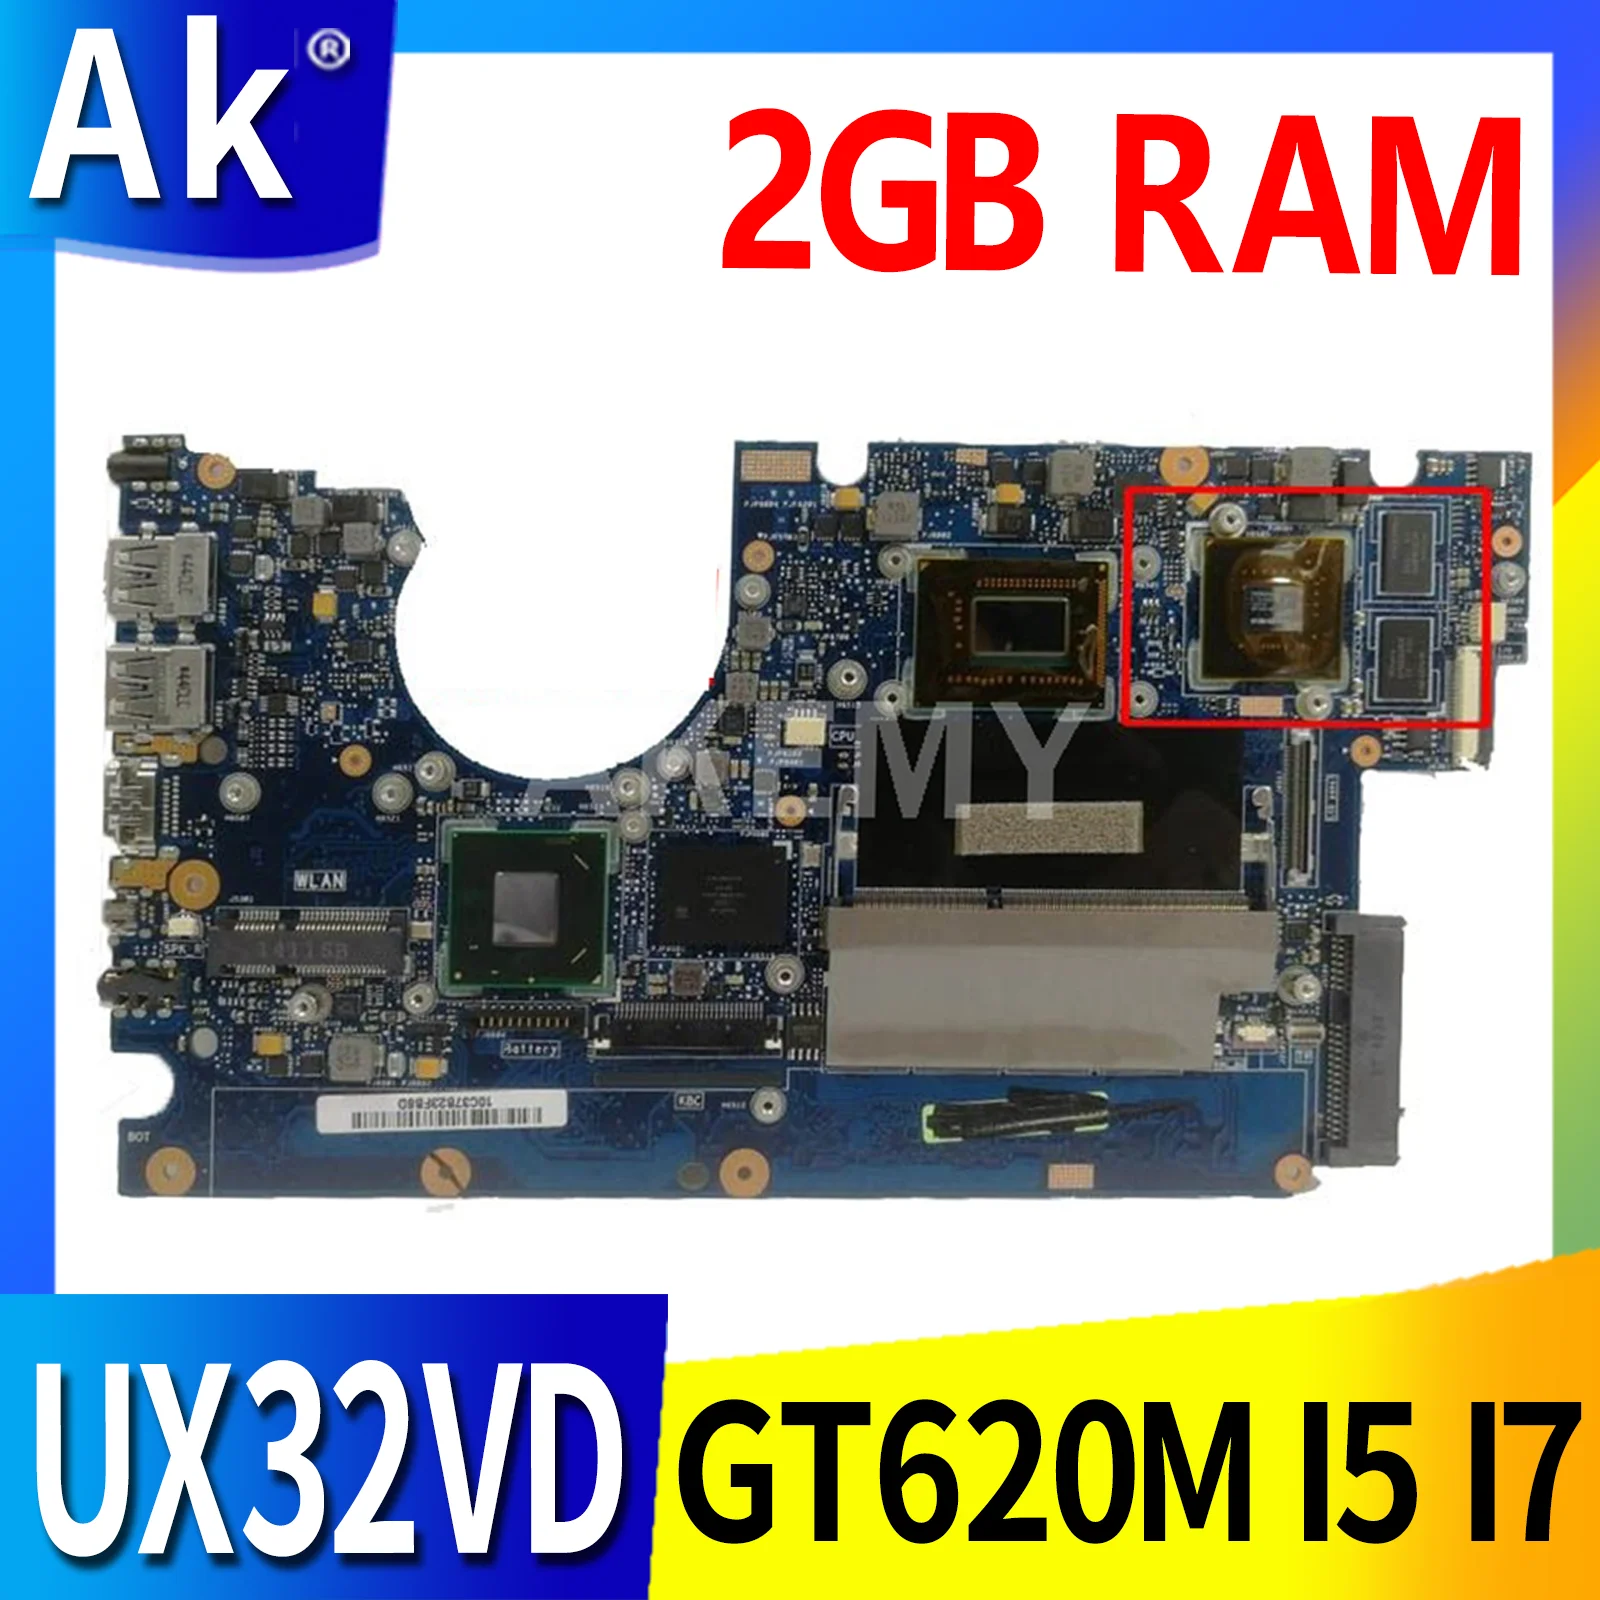 

UX32VD original Notebook mainboard GT620M GPU I5 I7 CPU 2GB RAM For ASUS UX32 UX32V UX32A UX32VD Laptop Motherboard